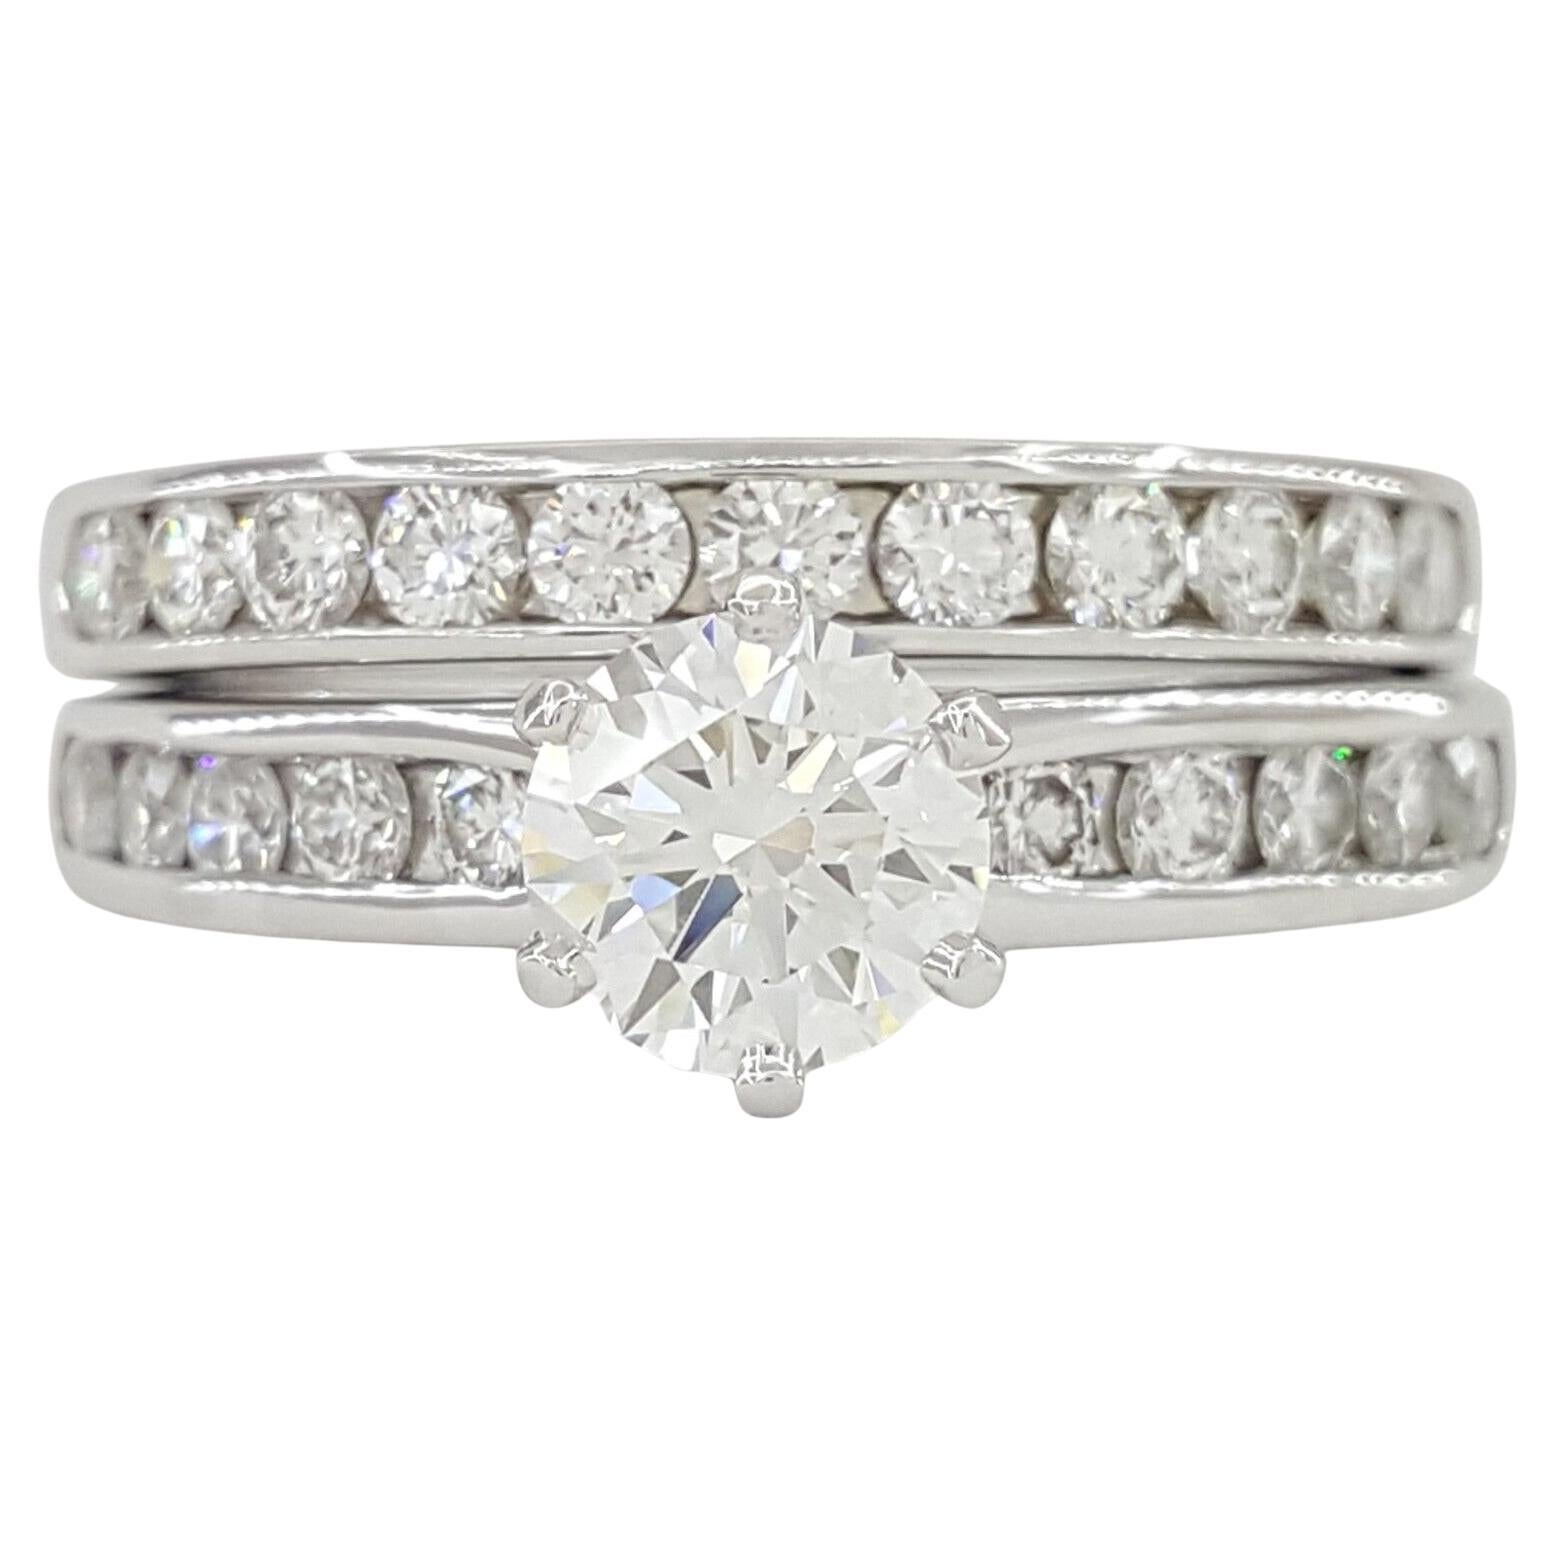  Tiffany & Co Platinum Channel-Set Diamond Engagement Ring & Band Set